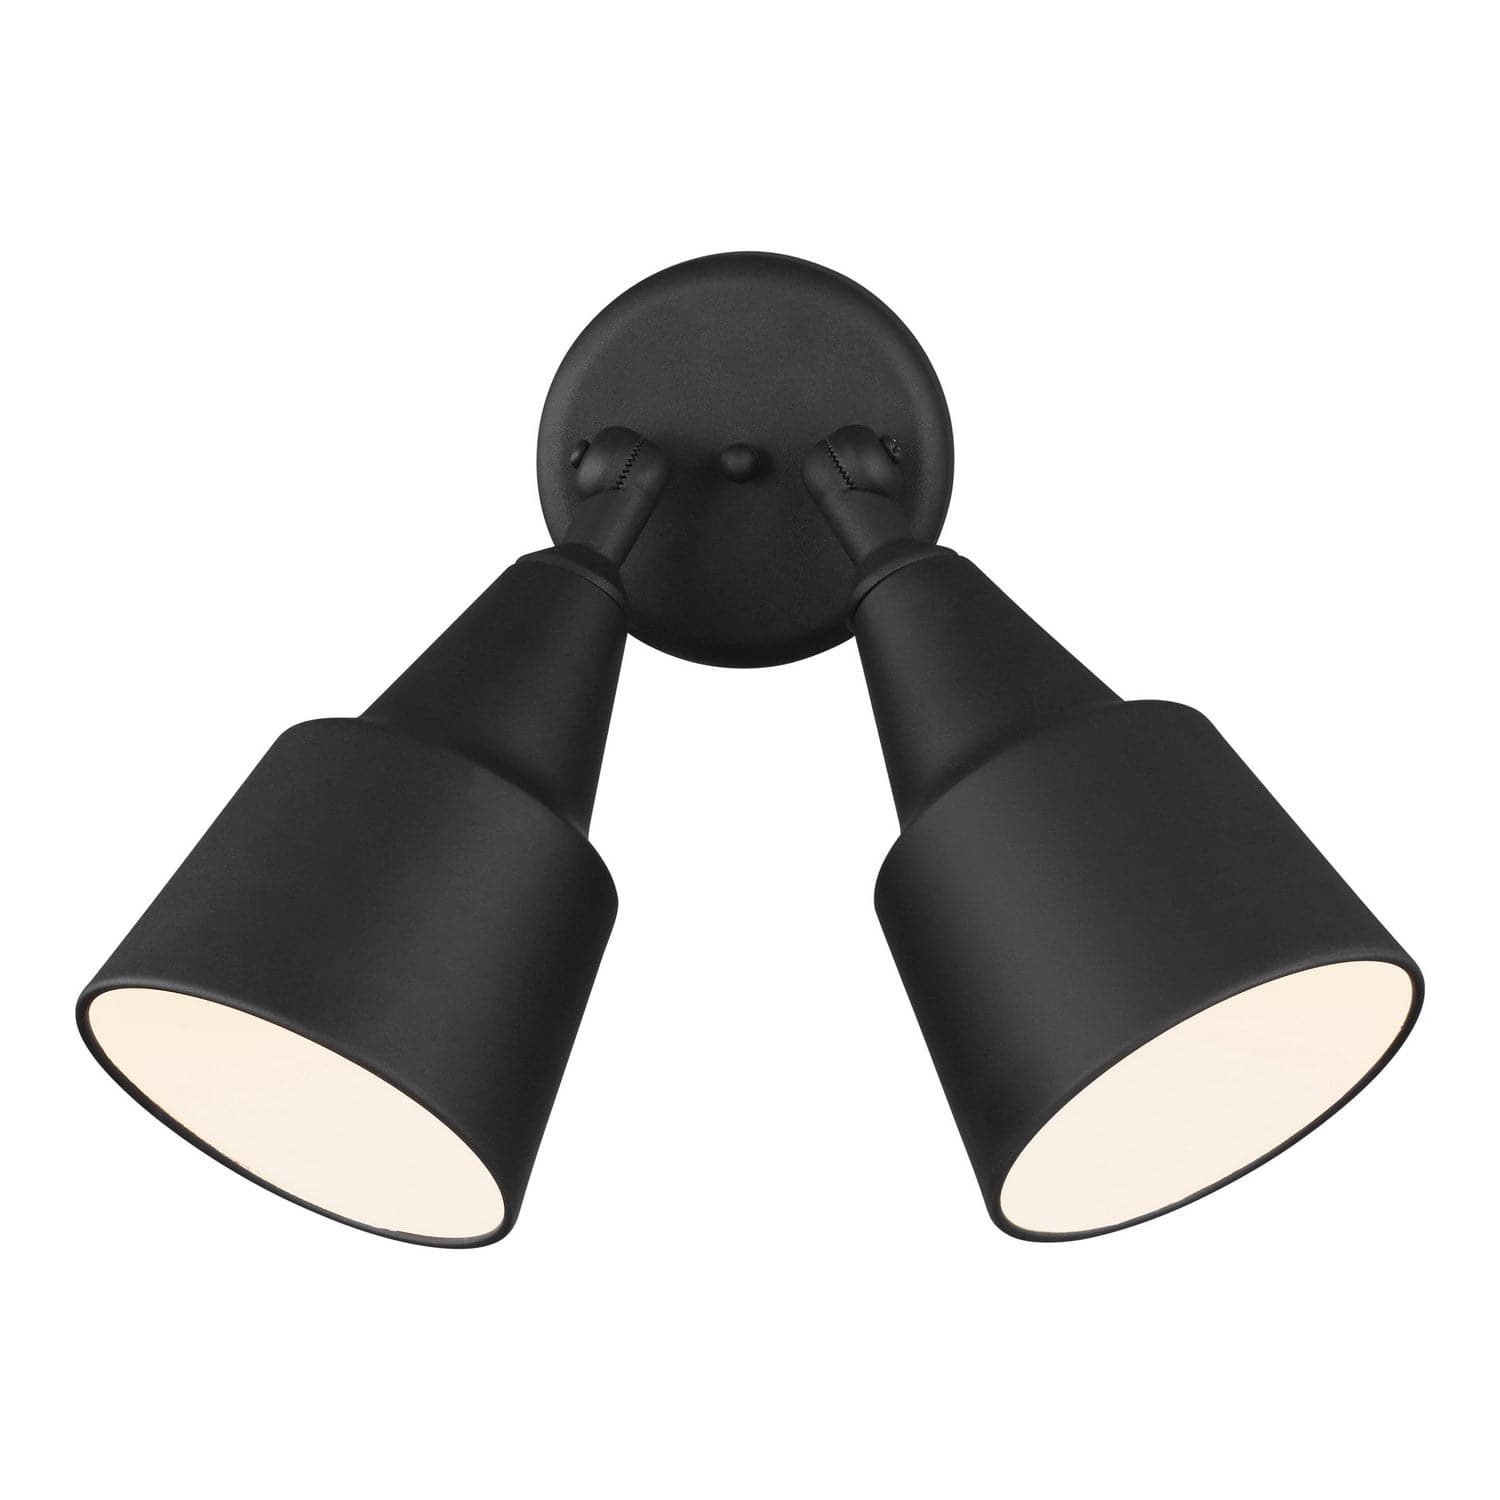 Generation Lighting. - 8560702-12 - Two Light Adjustable Swivel Flood Light - Flood Light - Black